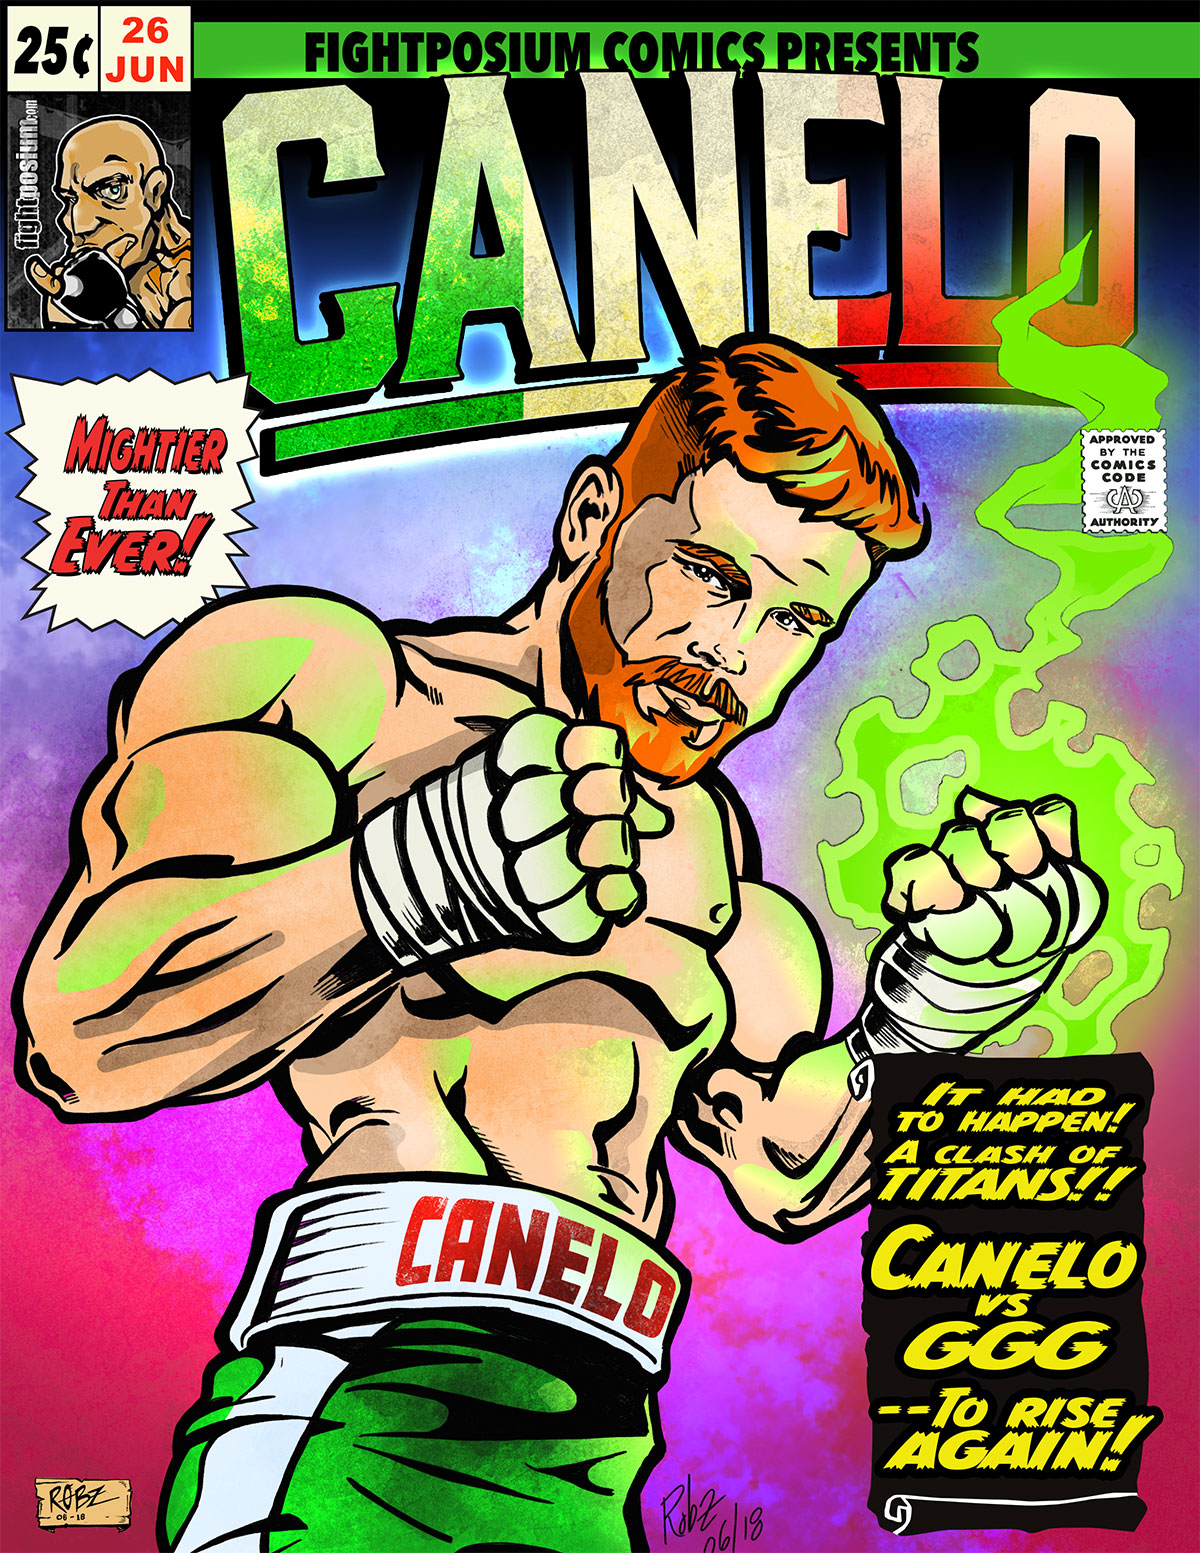 Canelo Alvarez --to Rise Again!